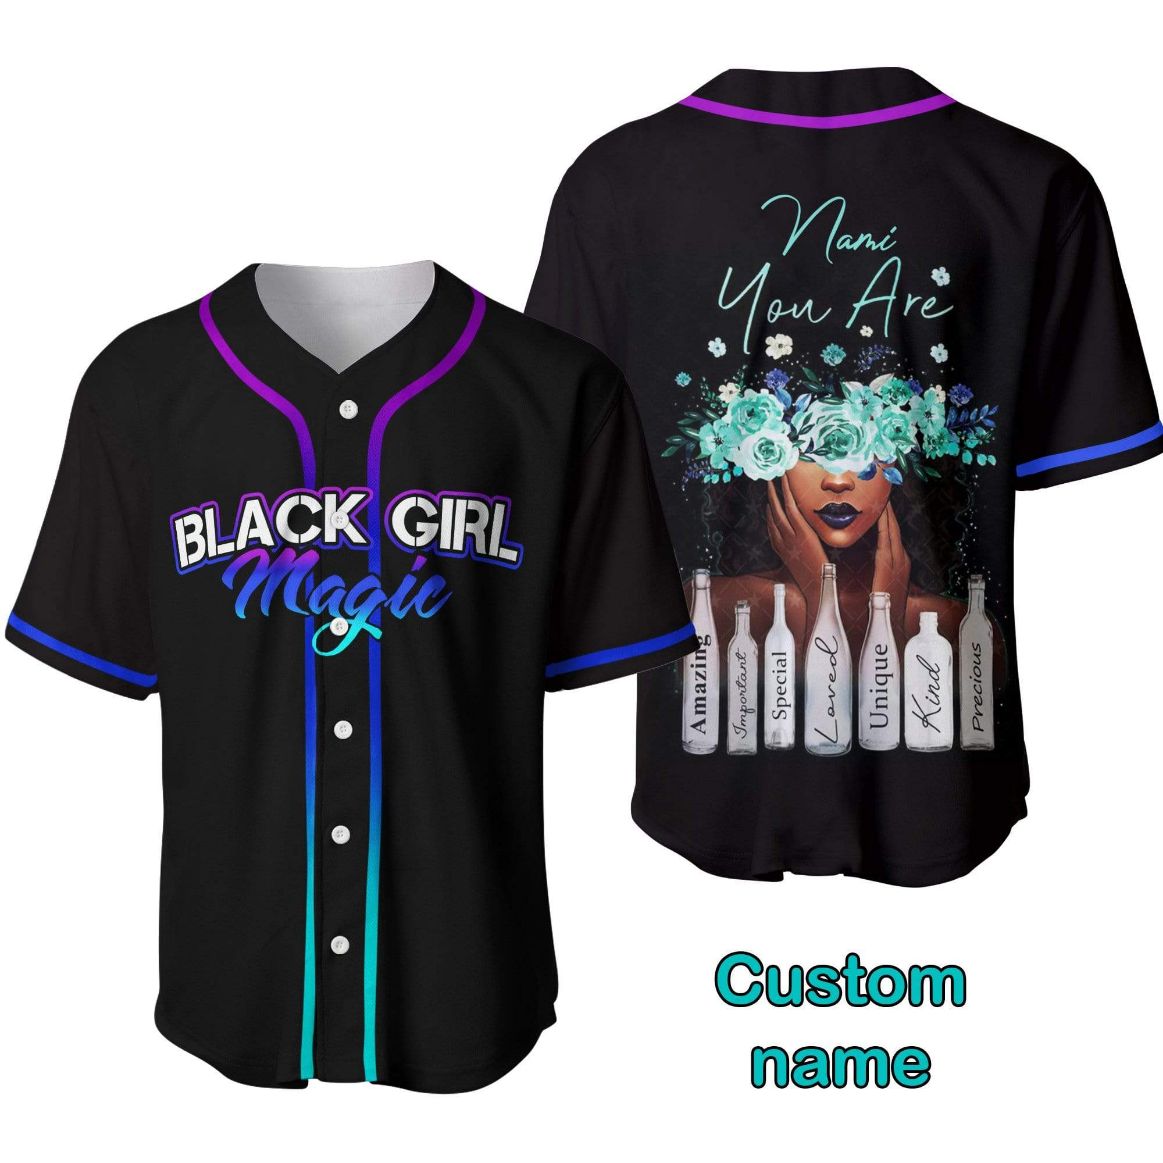 Black Girl Magic You Are Amazing Custom Personalized Name Baseball Jersey kv